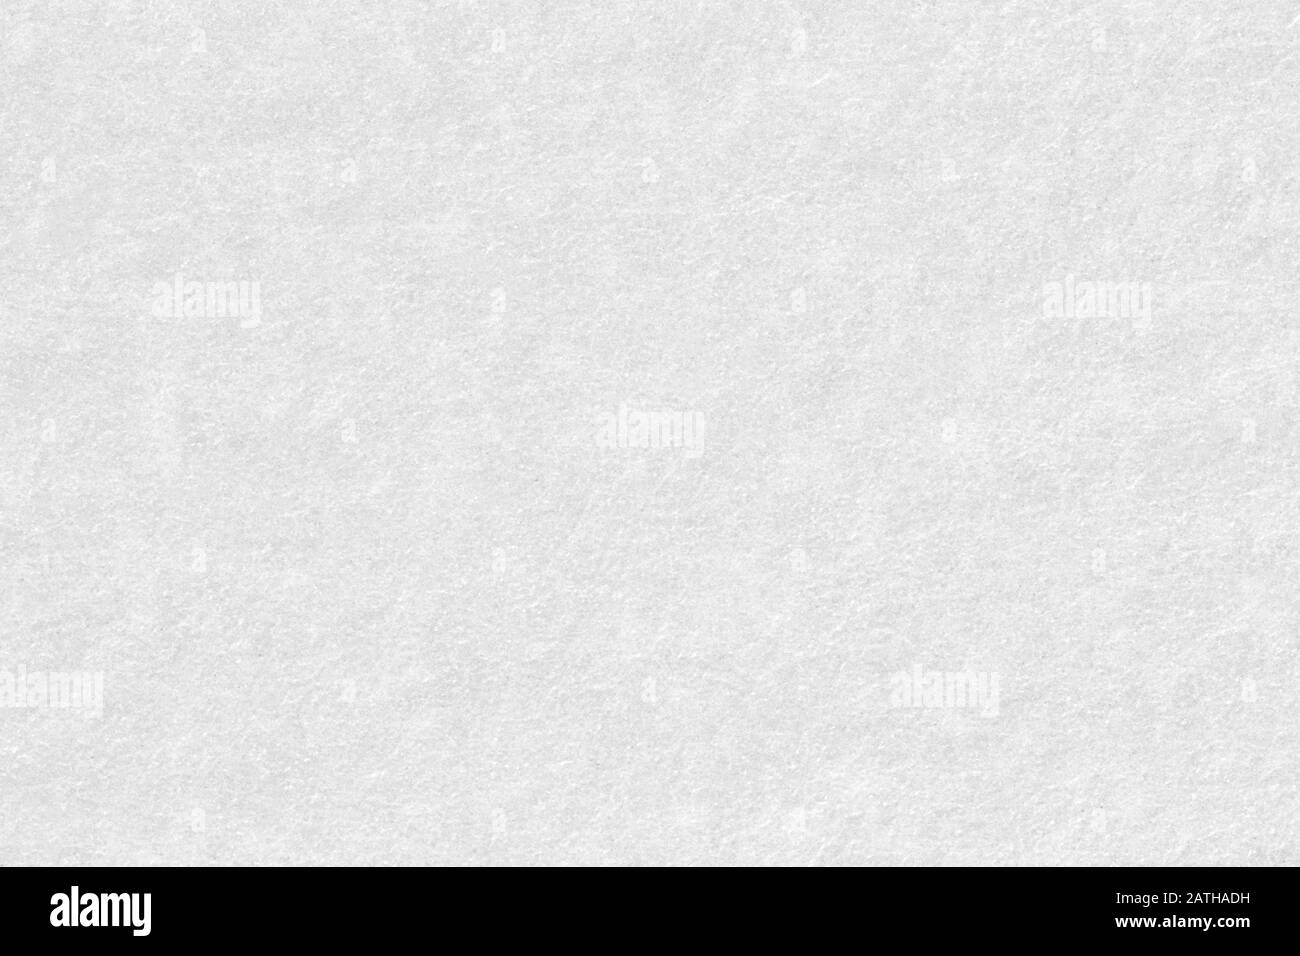 Foto von Aquarellpapier, Aus weißem, grobem Getreide, zerknittertem, körnigem Texturmuster. Stockfoto